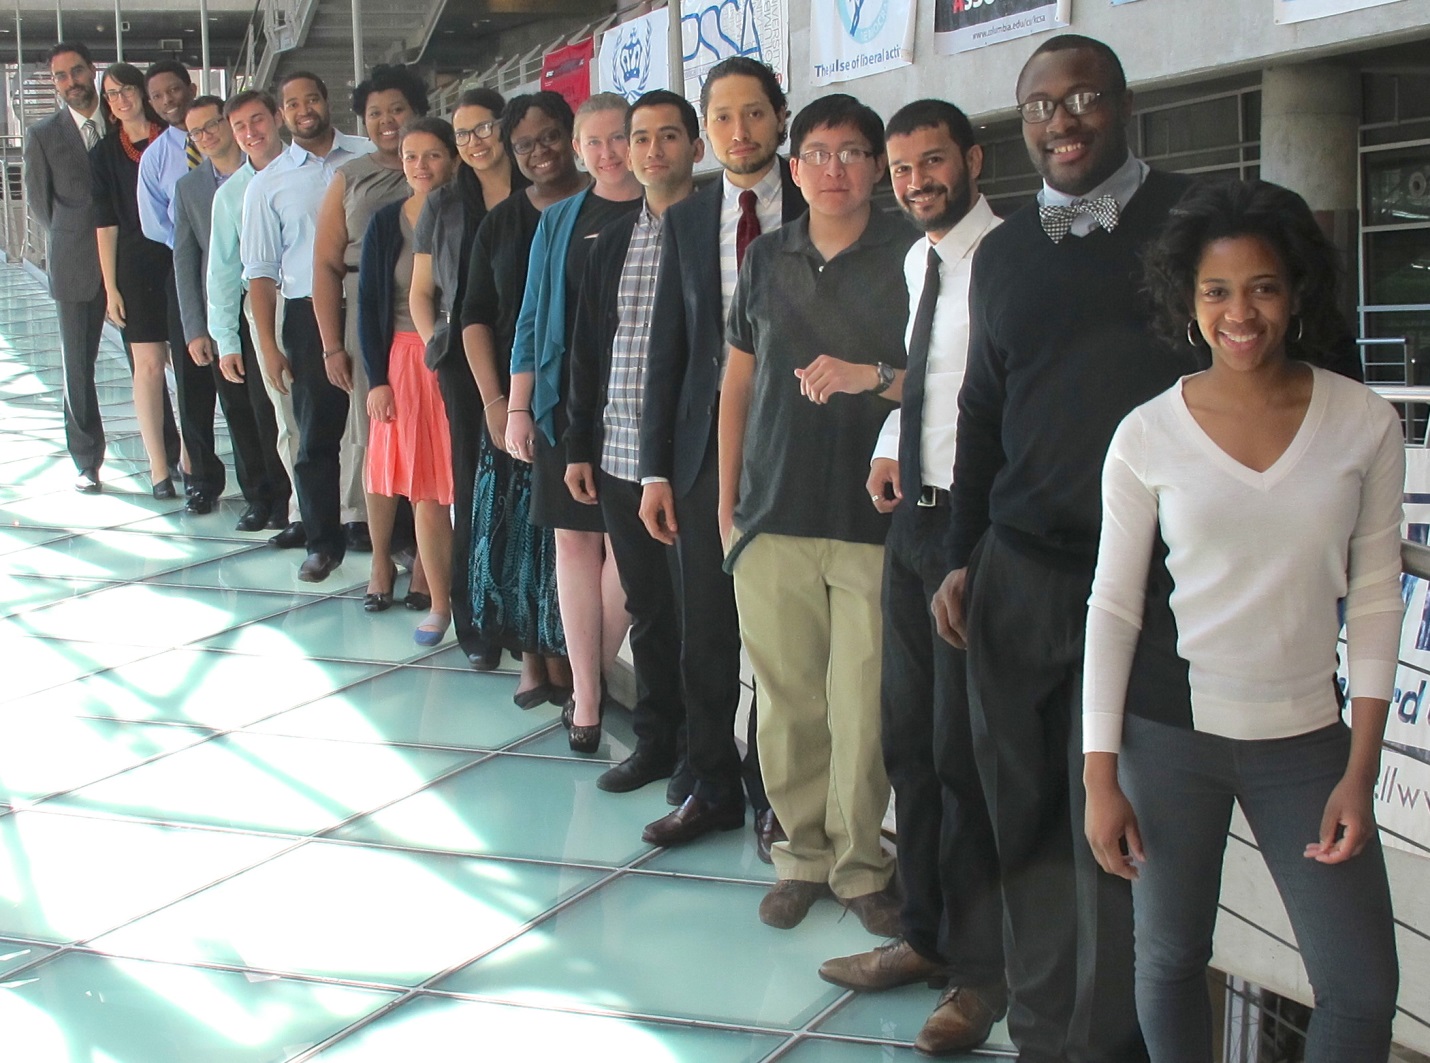 Bridge Program participants, alumni, and staff at the annual research symposium, June 2014